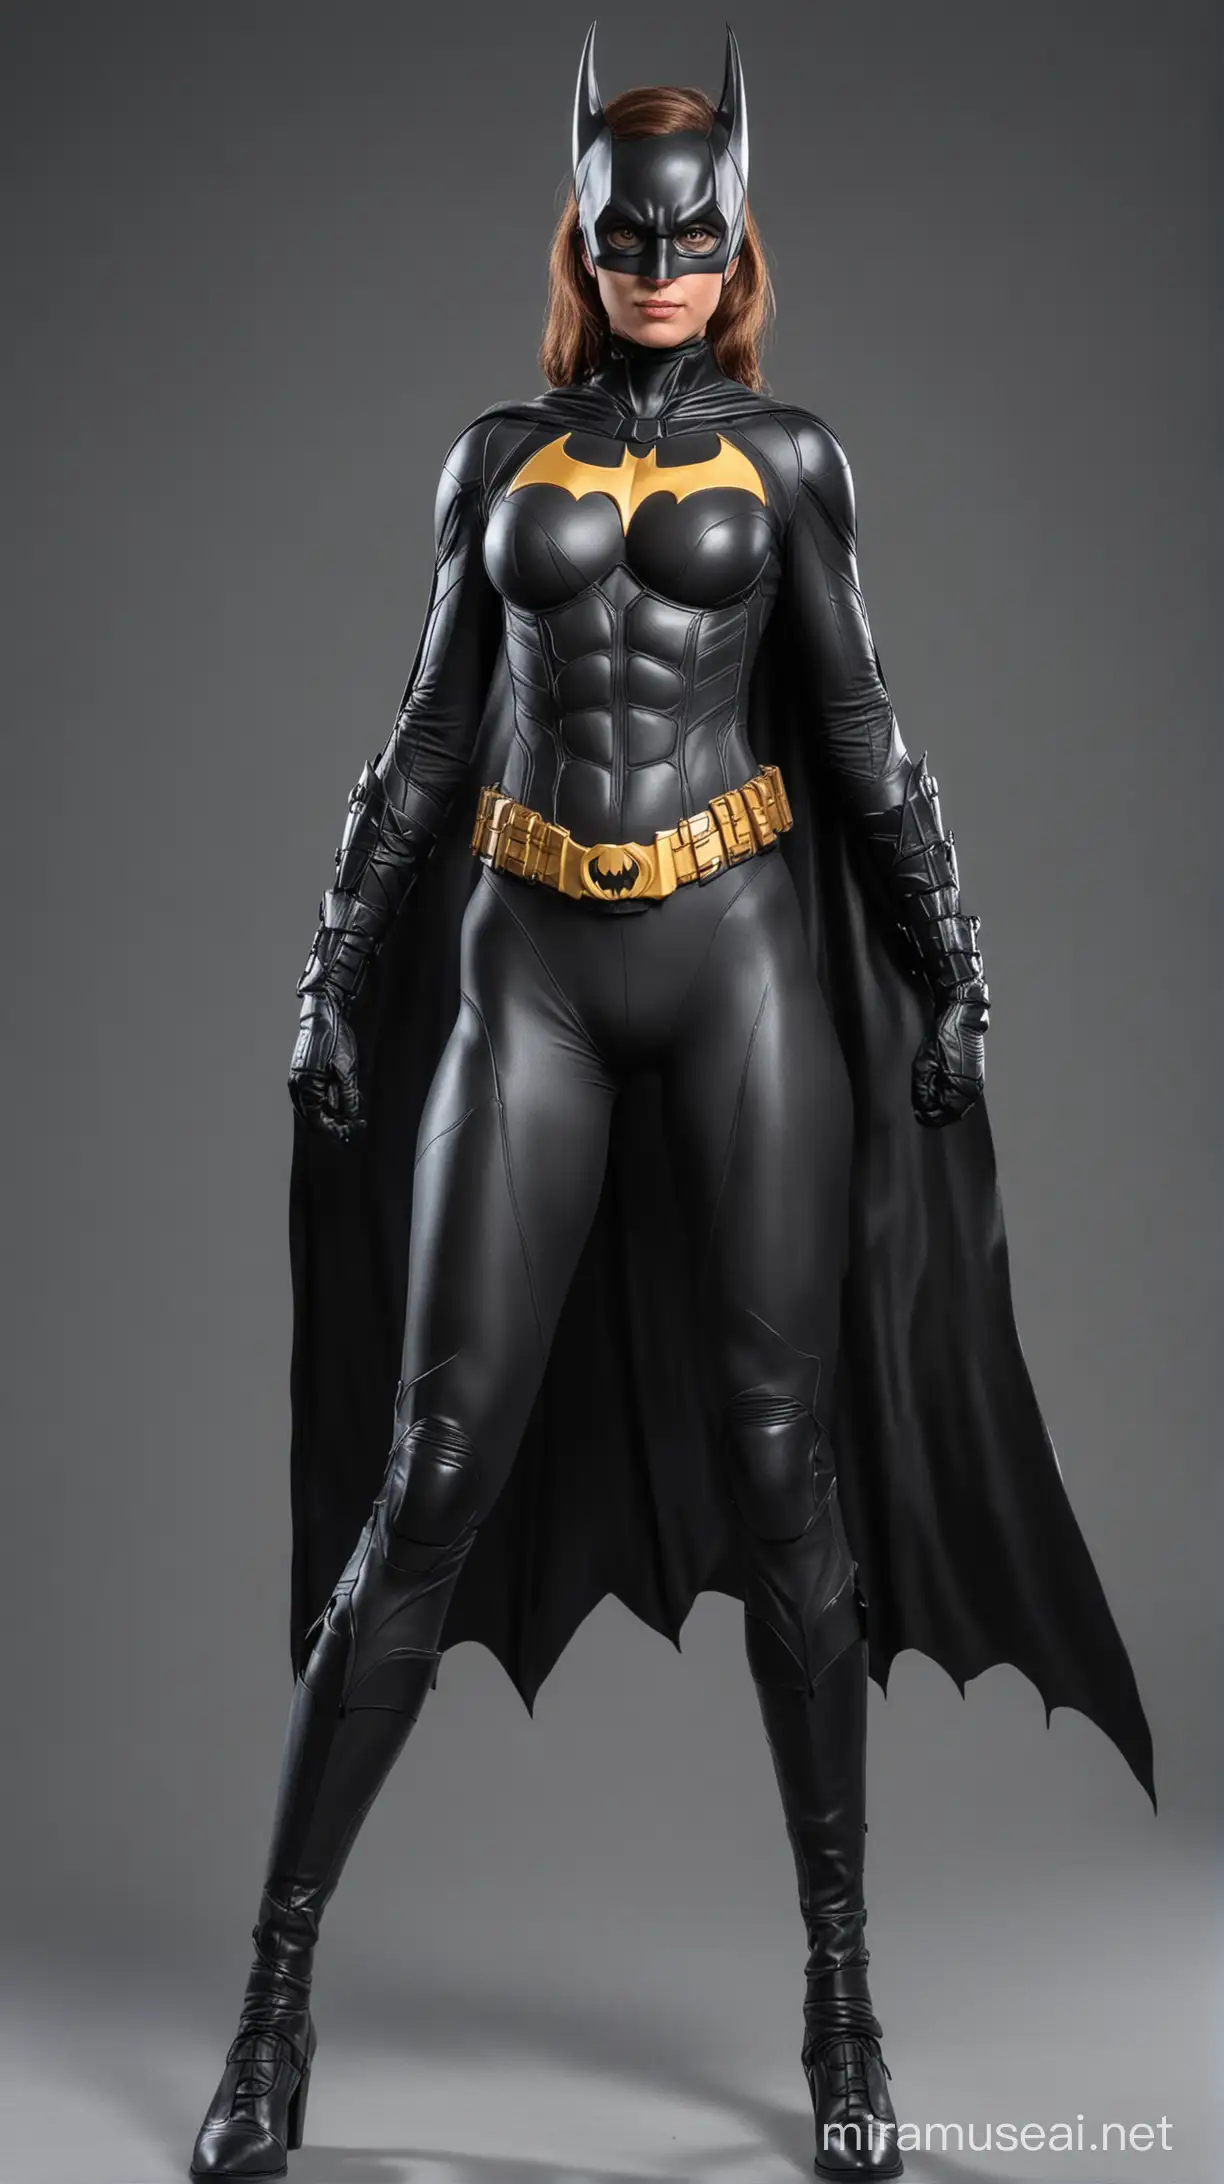 Batman Batgirl in Full Suit Ready for Action